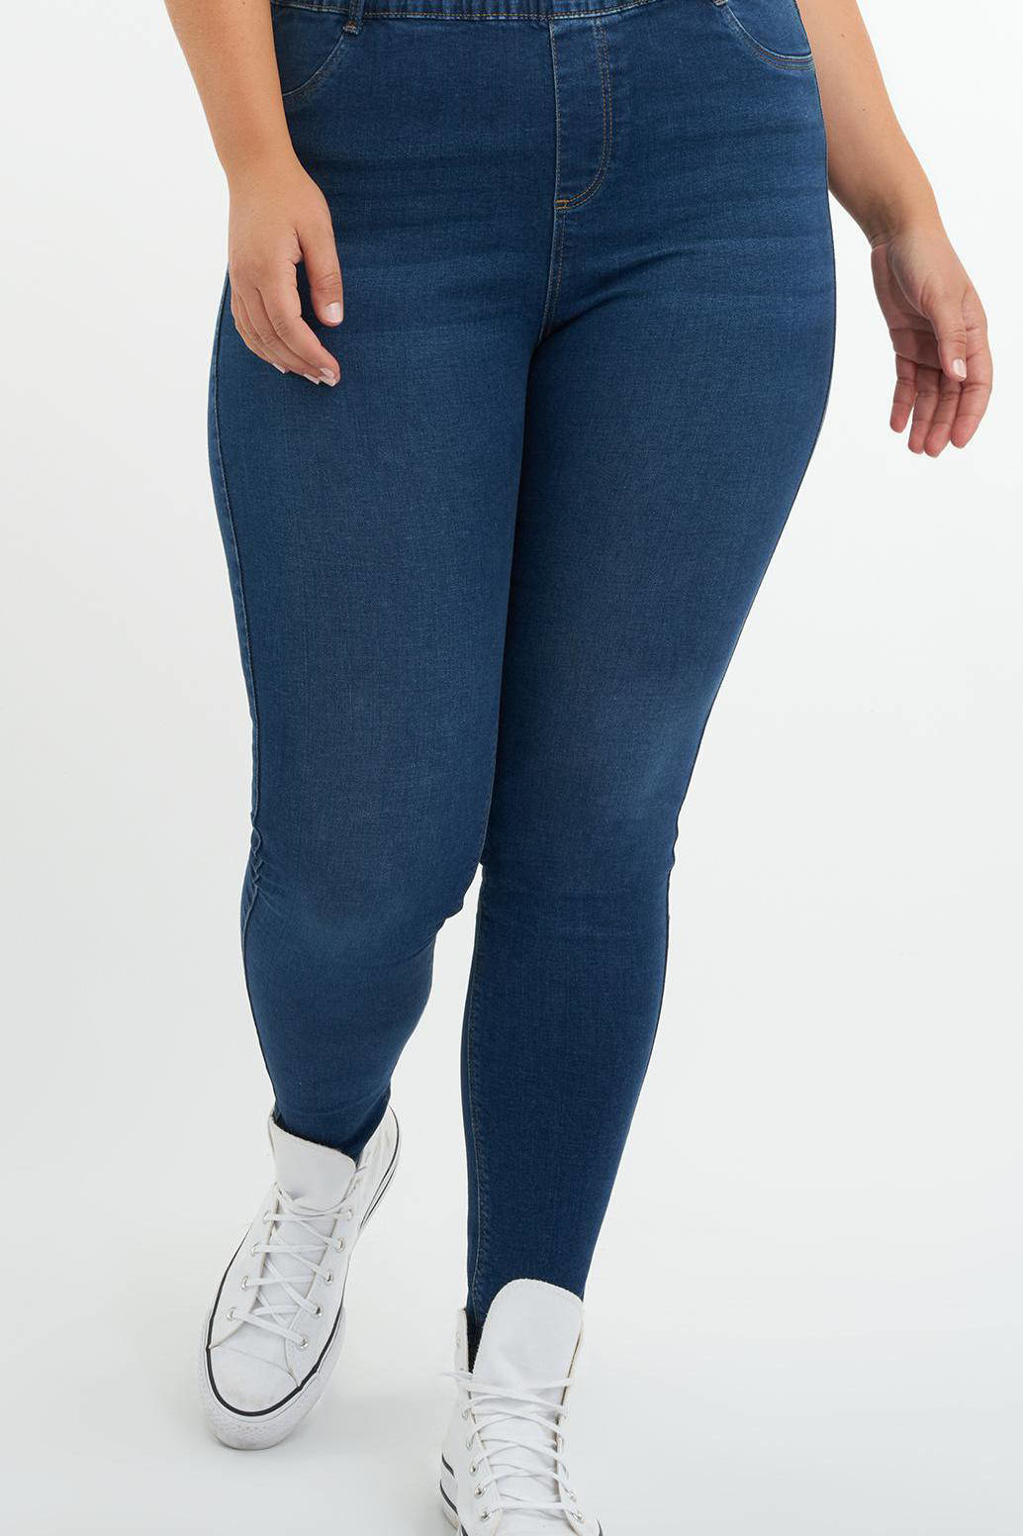 Donkerblauwe dames MS Mode low waist slim fit jegging van stretchdenim met elastische tailleband